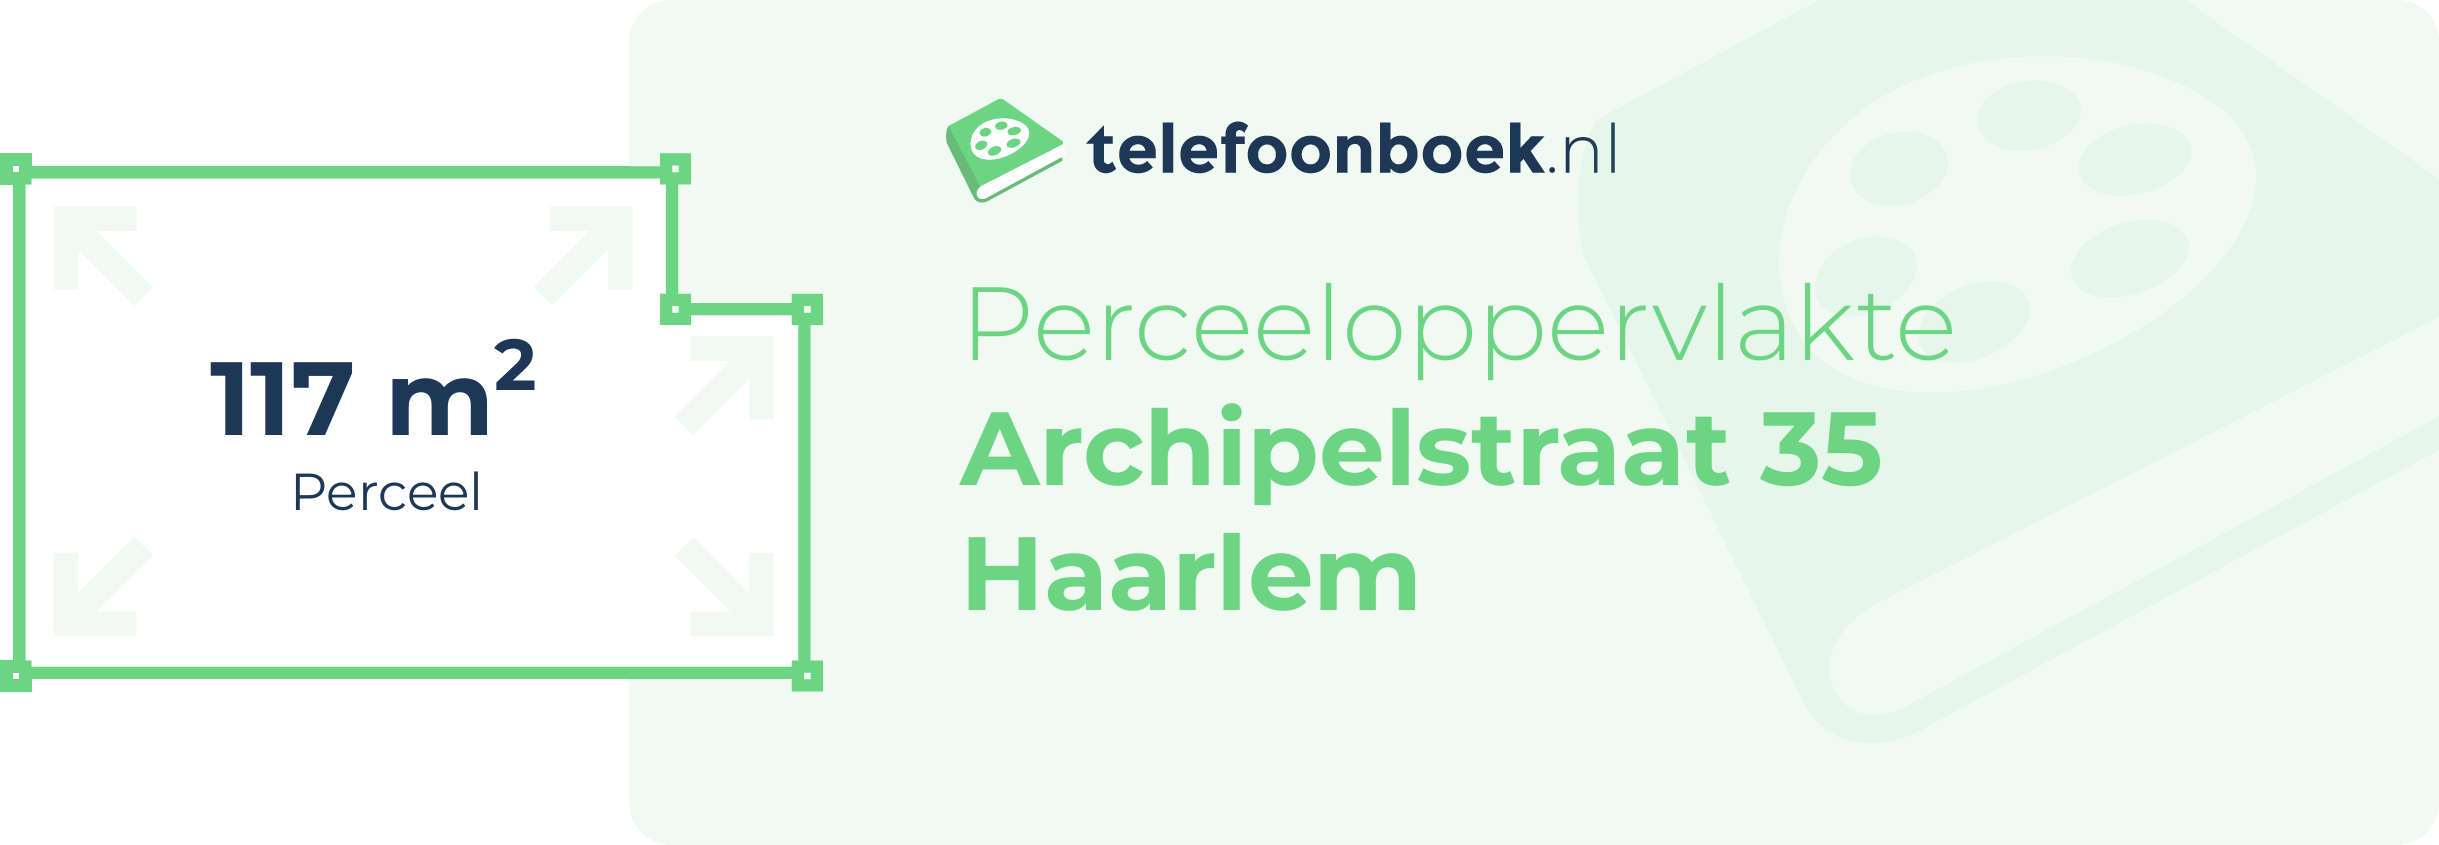 Perceeloppervlakte Archipelstraat 35 Haarlem